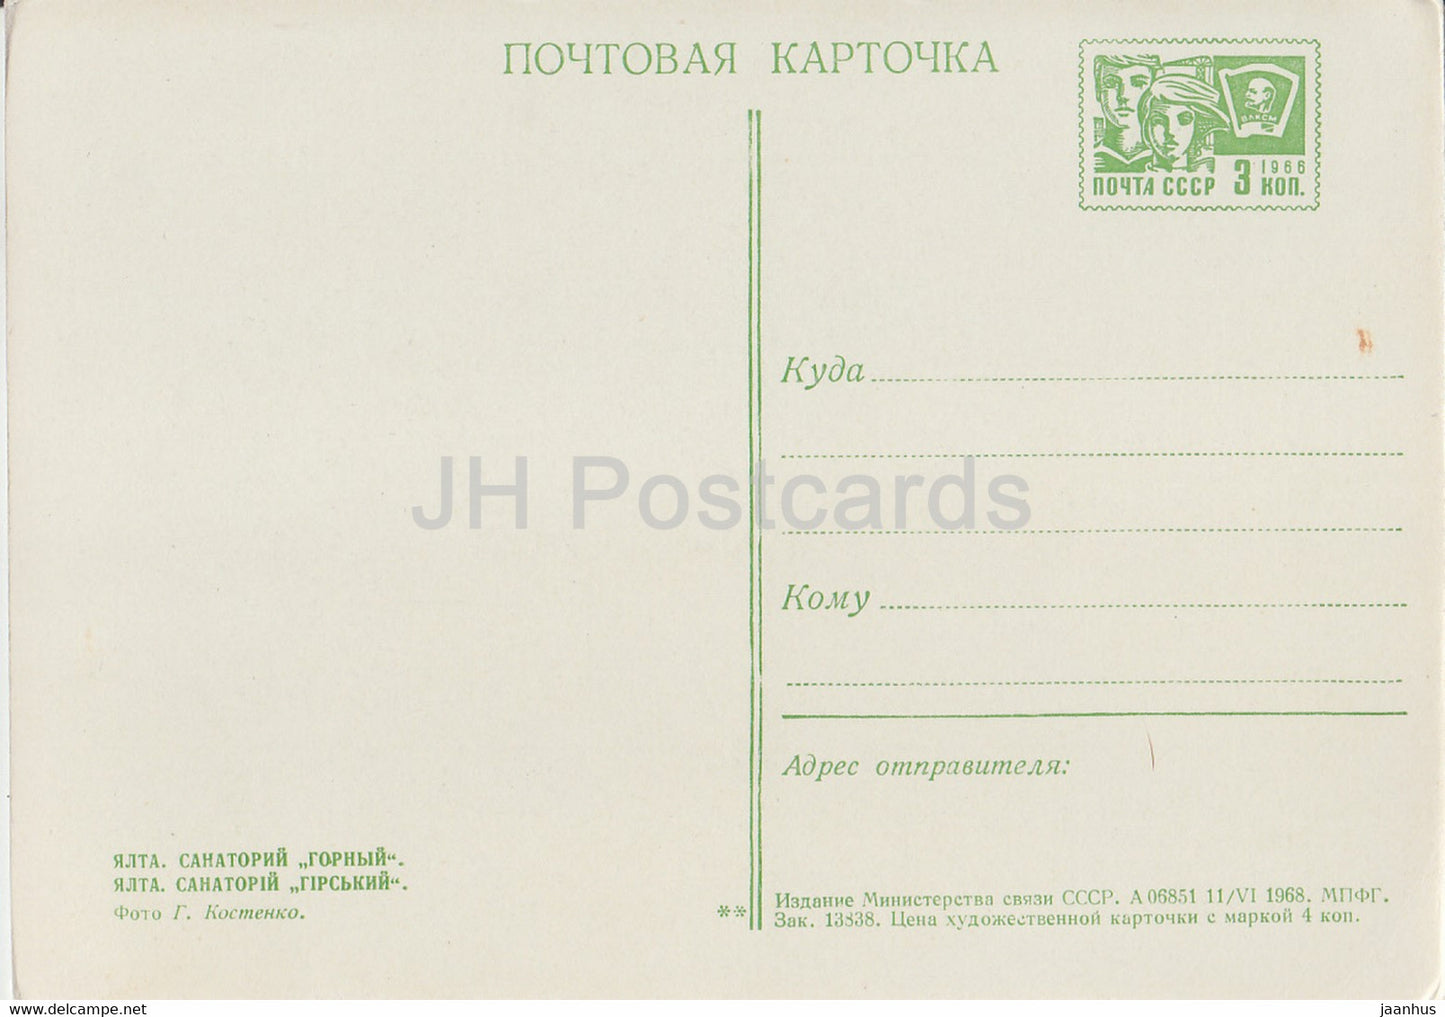 Yalta - sanatorium Gornyi - Crimea - postal stationery - 1968 - Ukraine USSR - unused